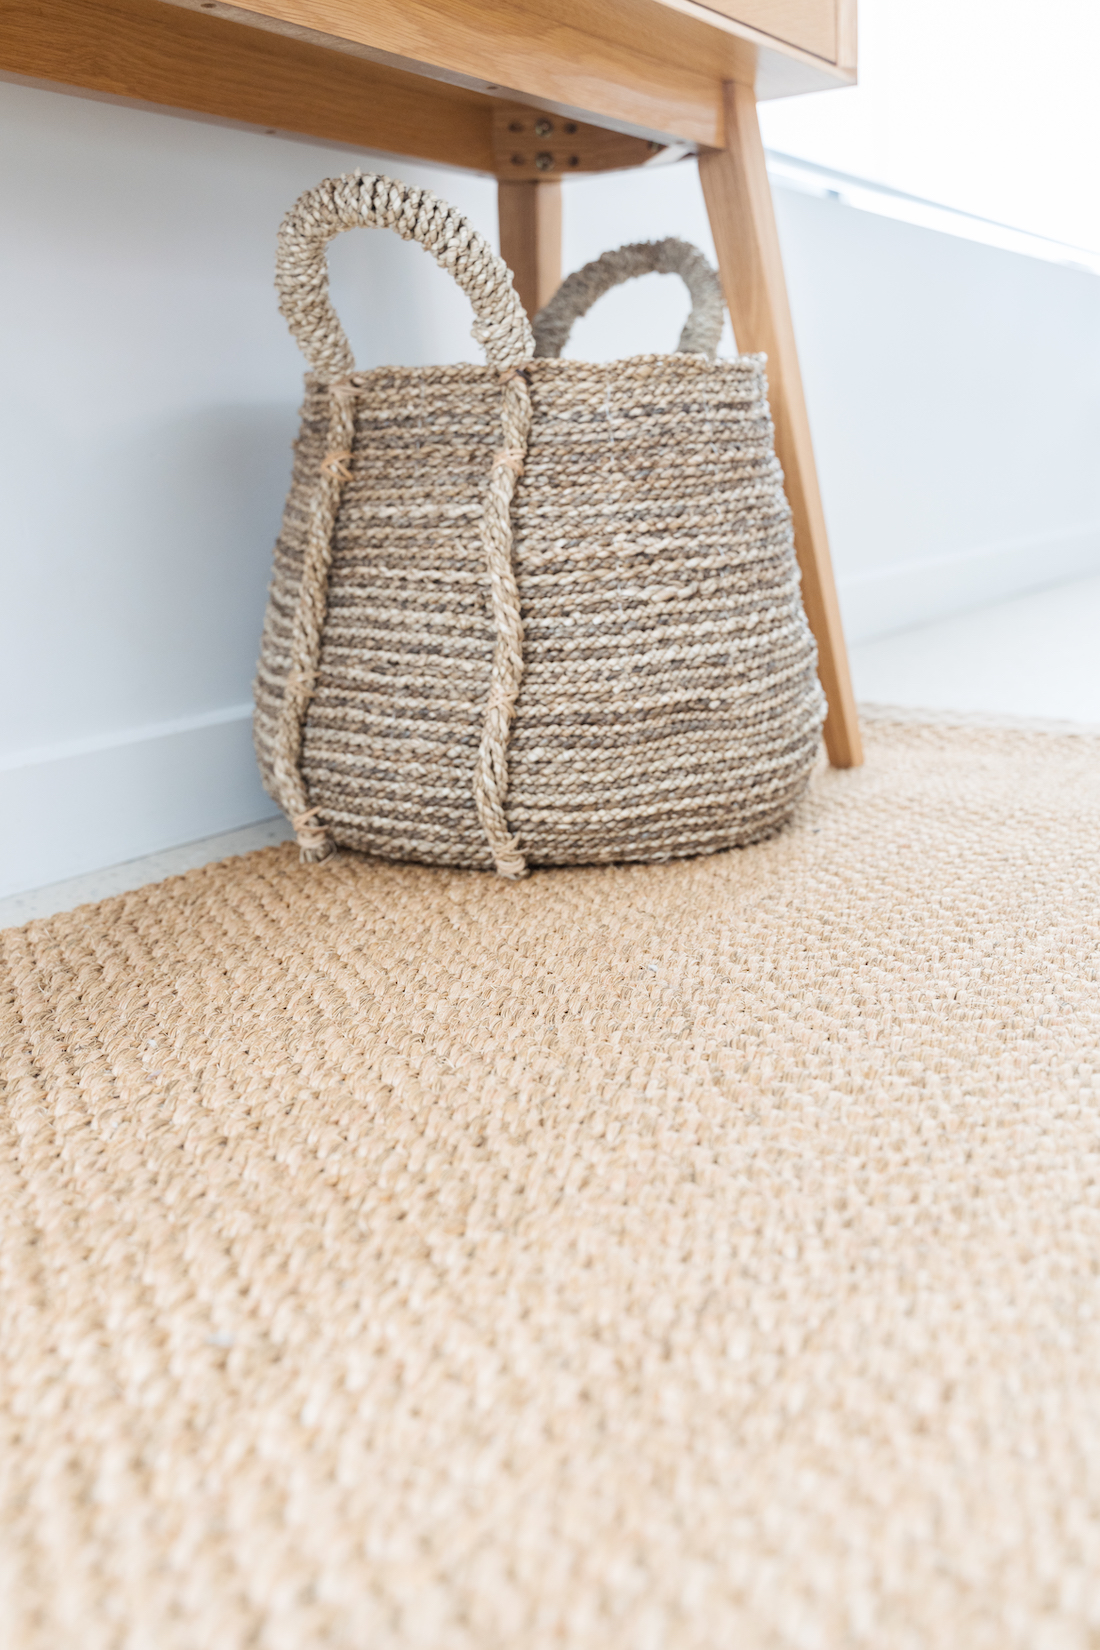 Jute rug and woven basket